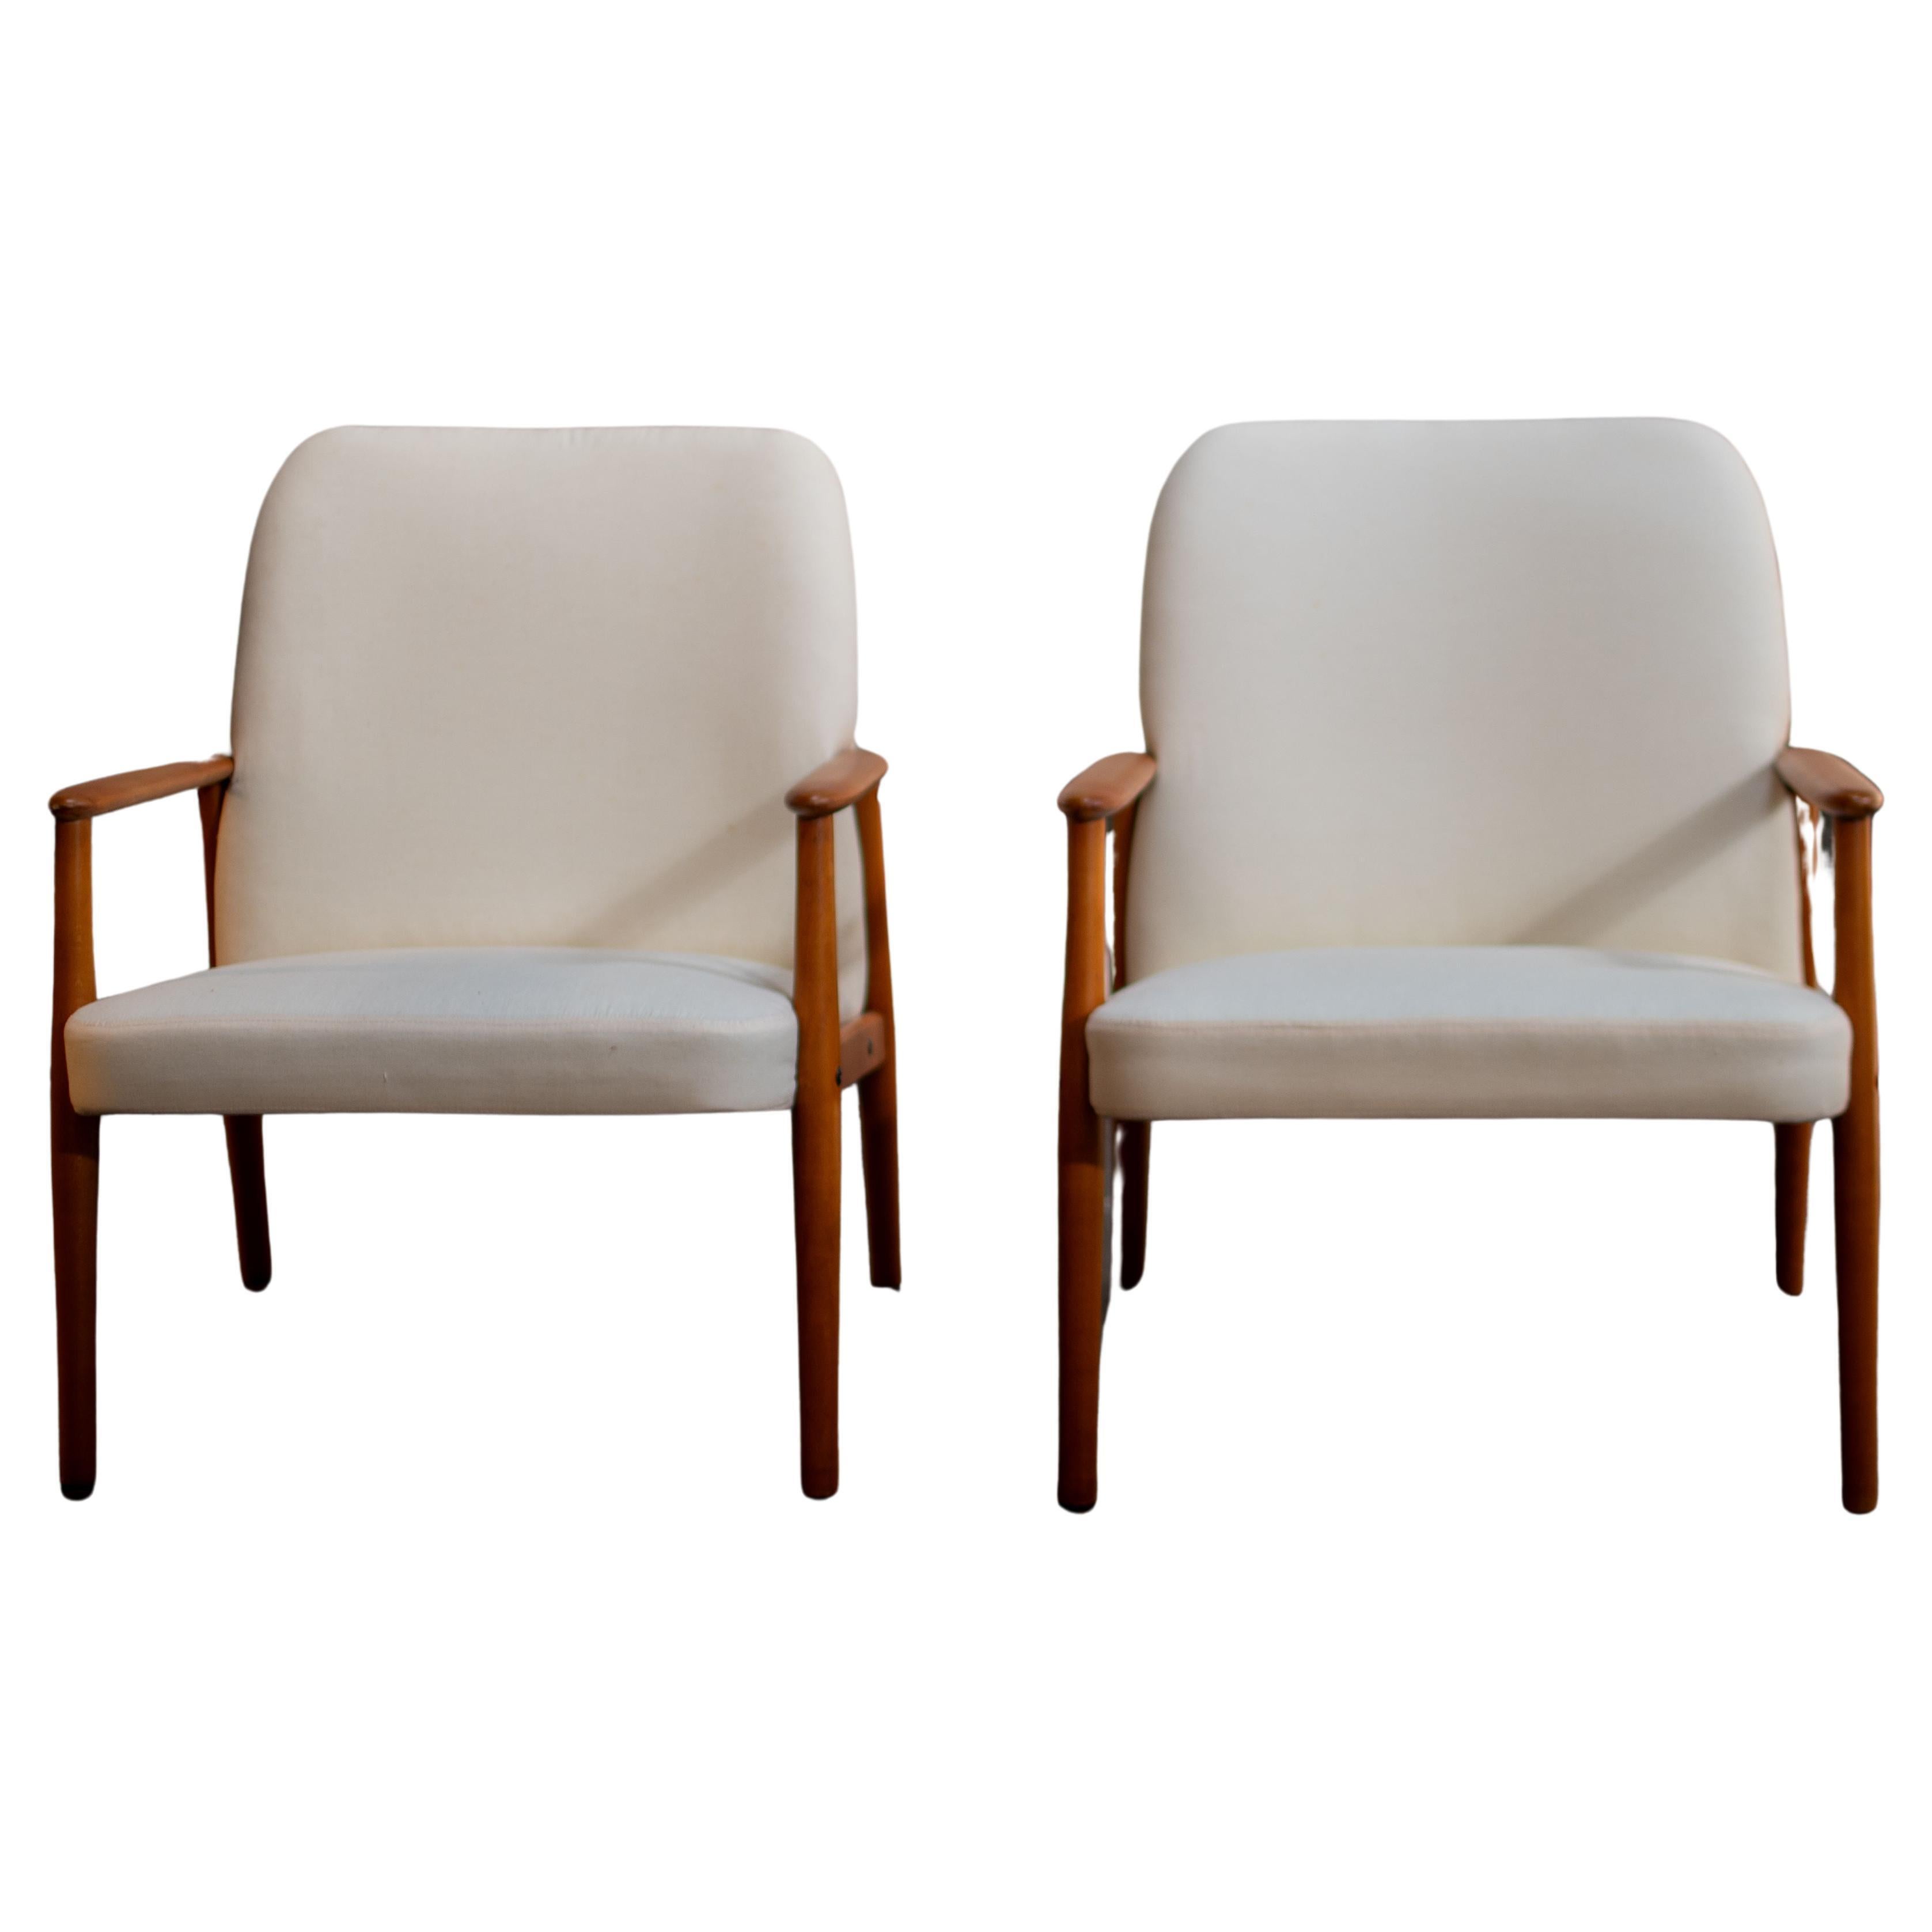 Pair of Scandinavian Modern Chairs - COM Ready For Sale